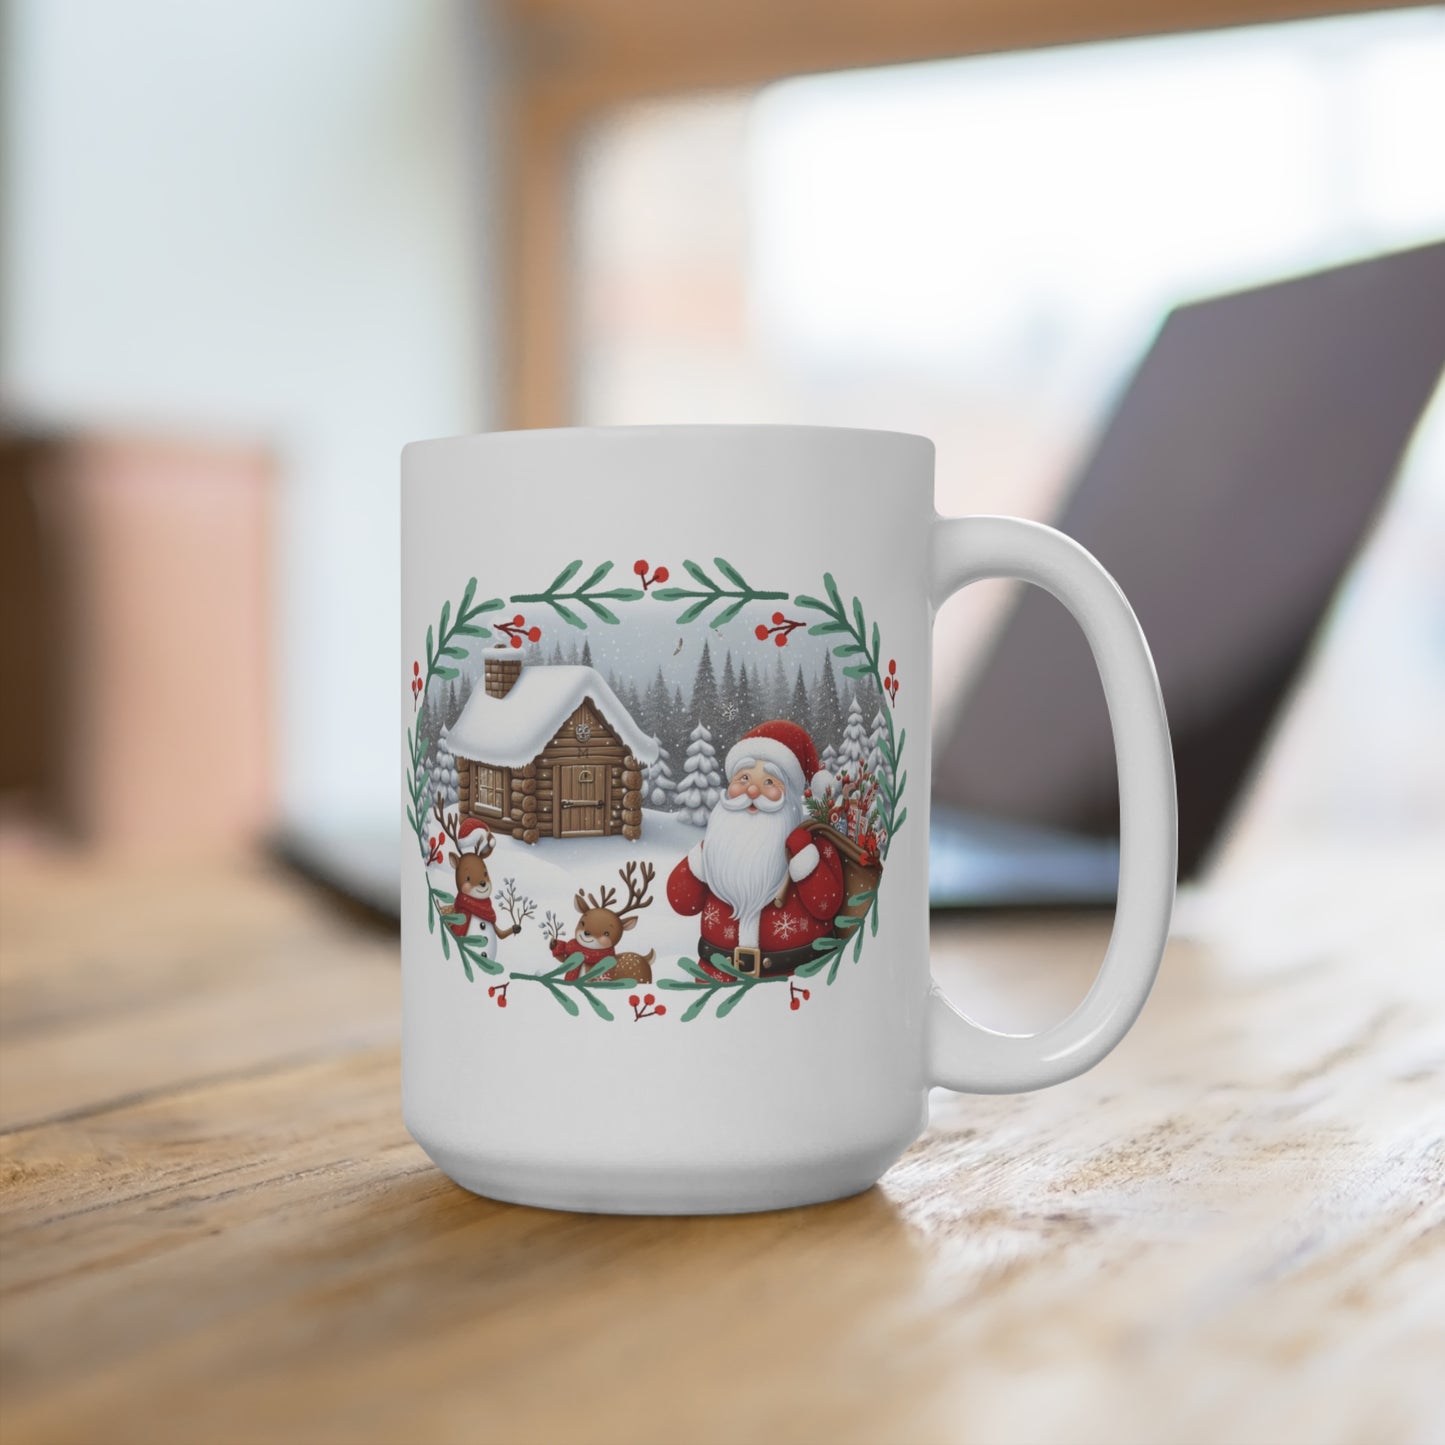 Santa, Gifts, Cabin, Reindeer, Snow, Trees, Birds, Christmas, Christmas Eve Gift Mug 15oz MII Designs